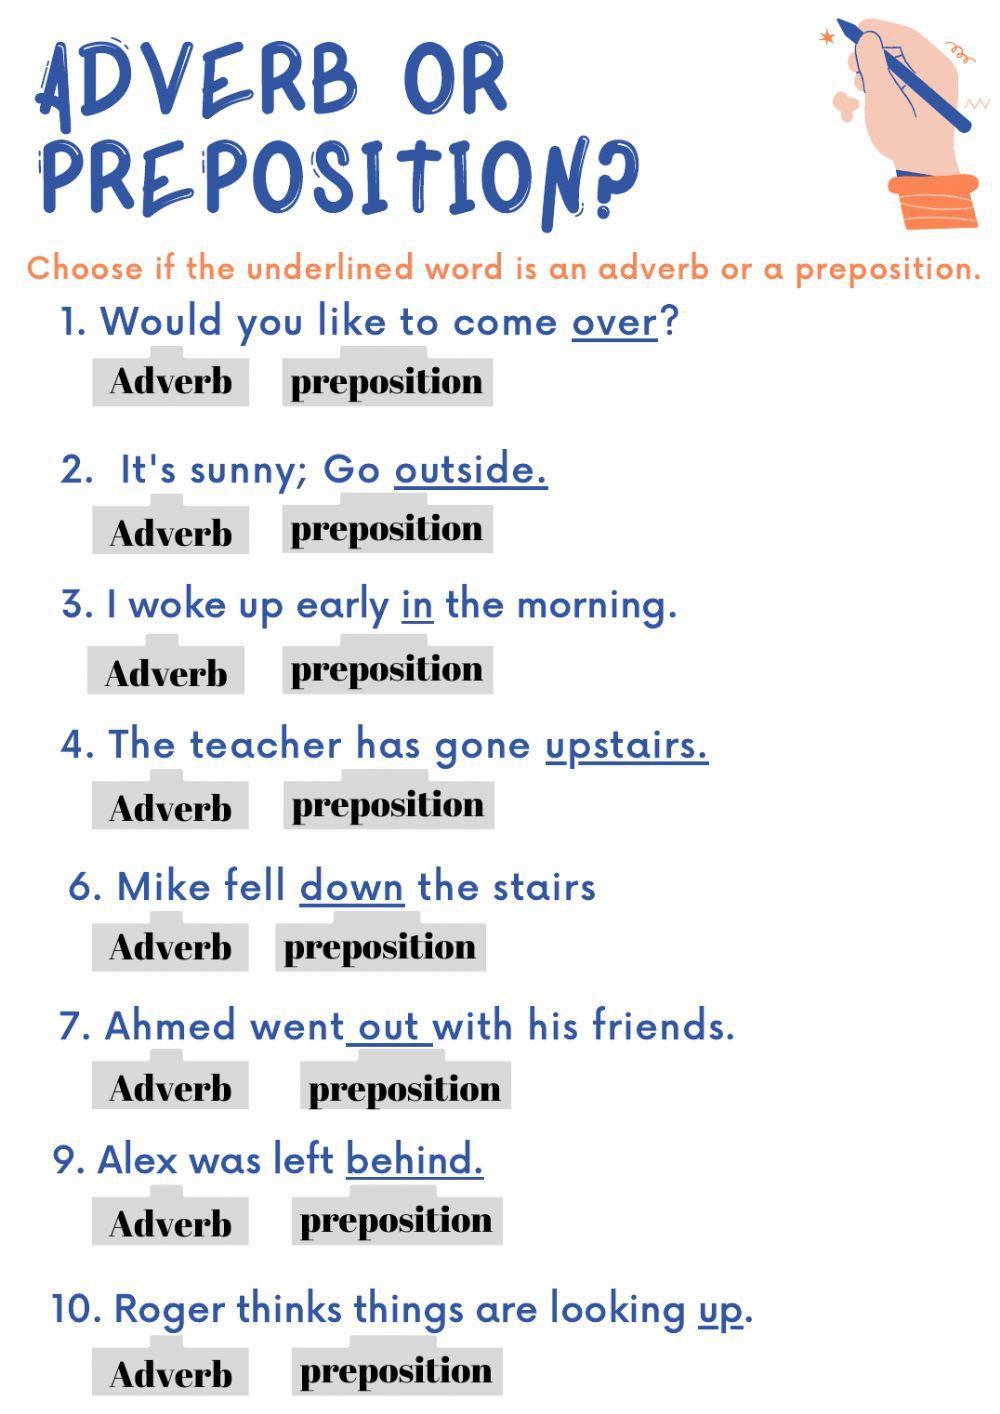 Parts of Speech: Adverbs